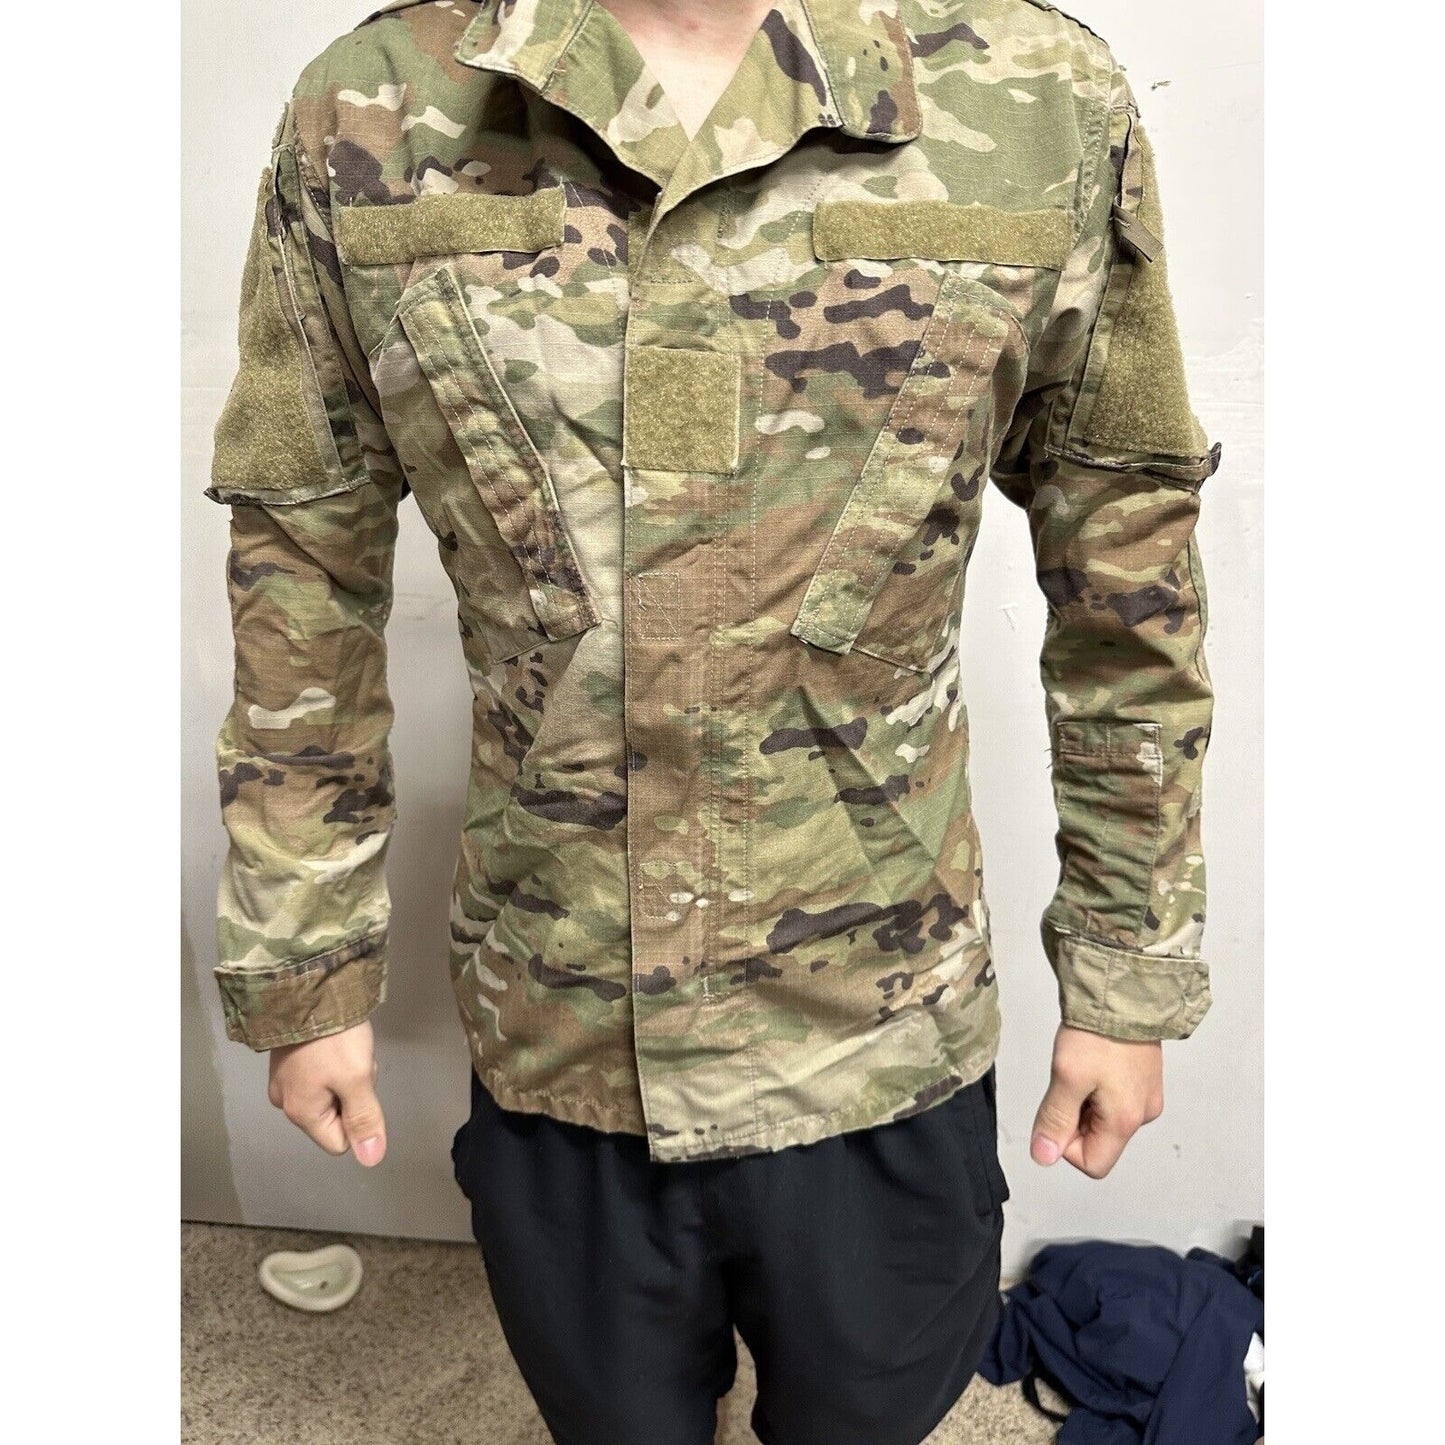 Men’s Ocp Top Blouse Uniform Army Air Force Combat Uniform X-small Short